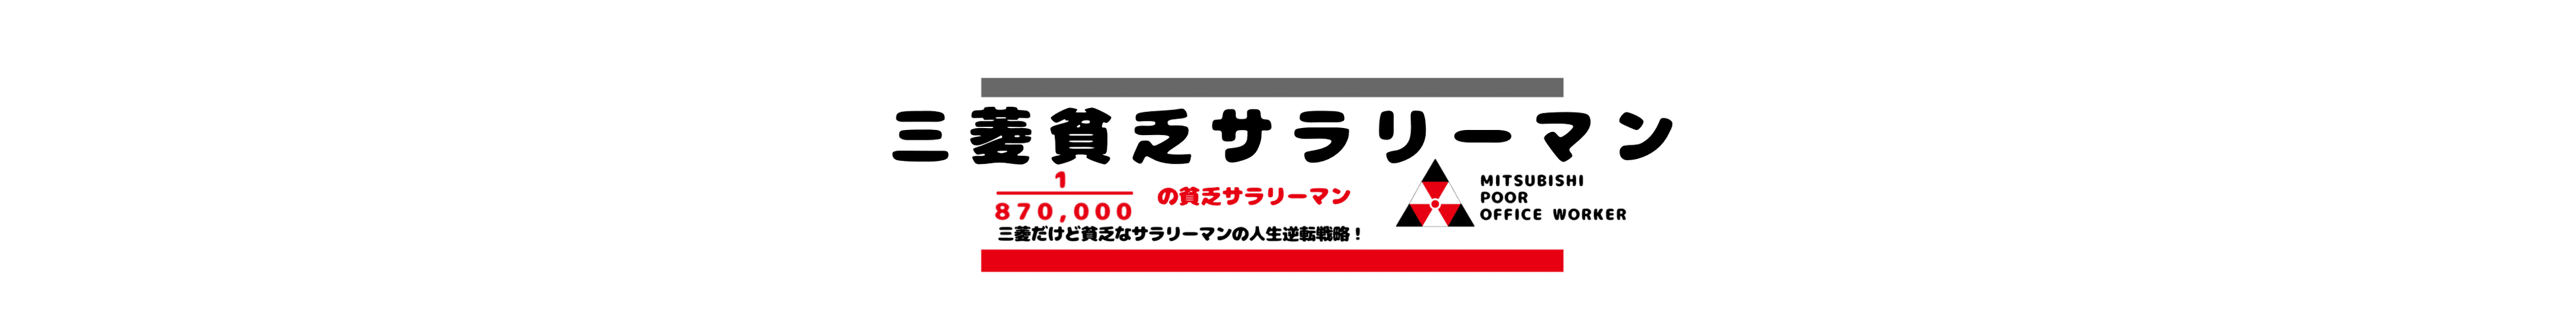 mitsubishi-poor-officeworker Banner